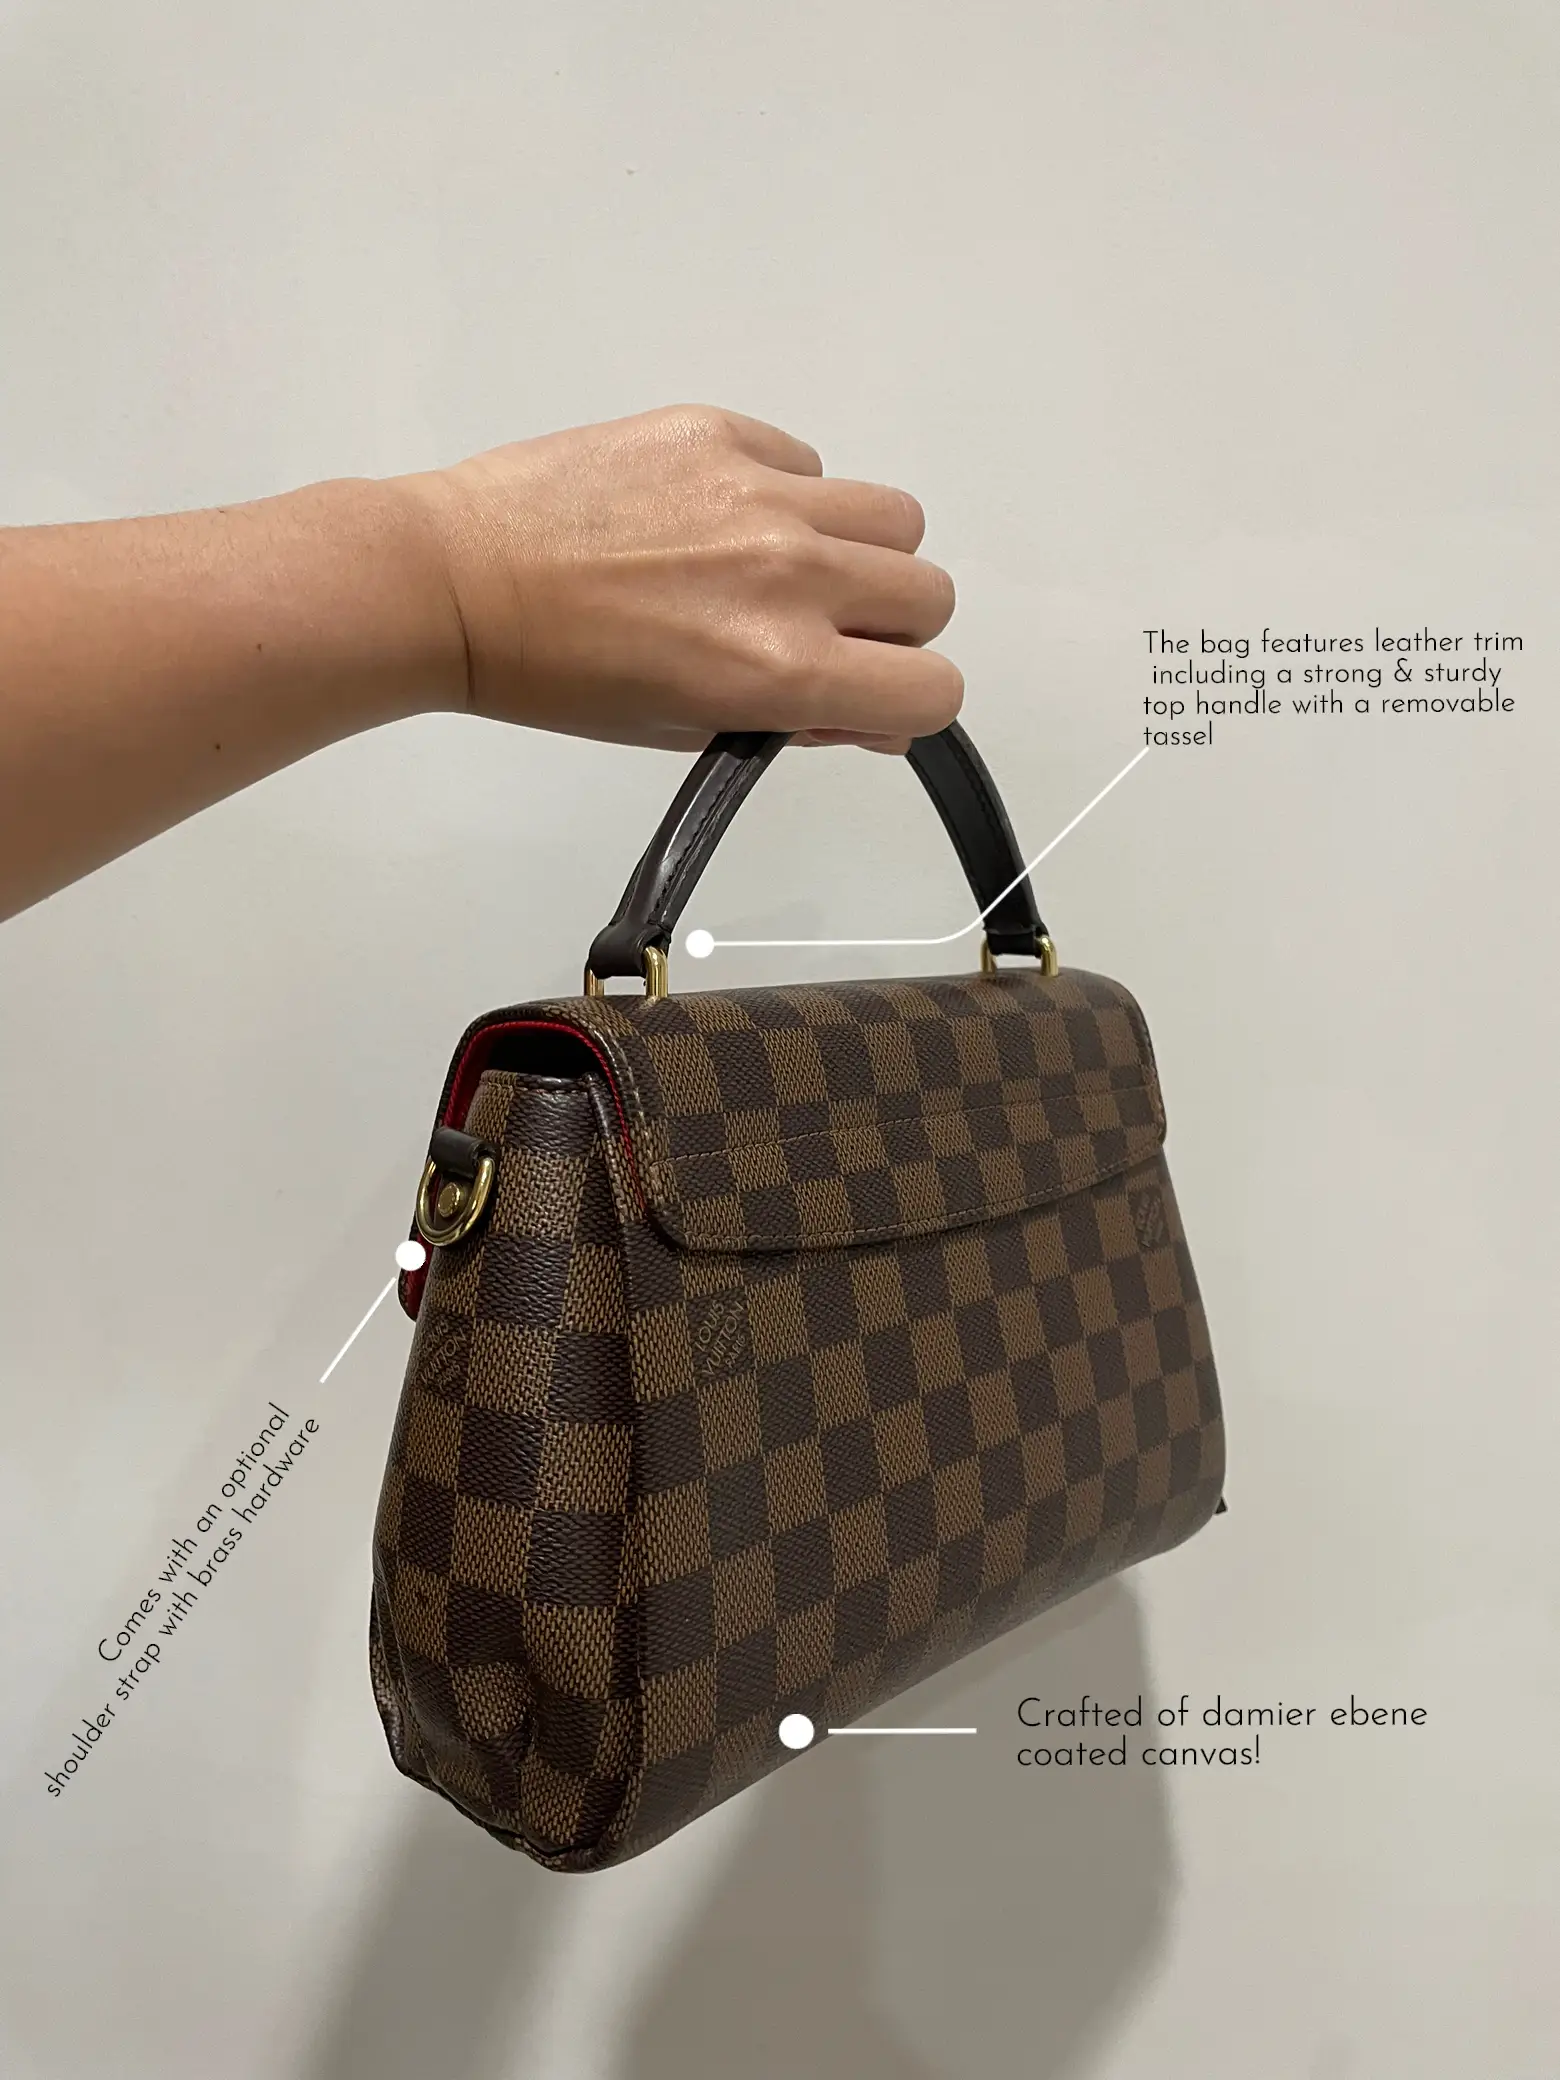 Louis Vuitton Micro Metis Size Comparison vs. Chanel Mini Trendy